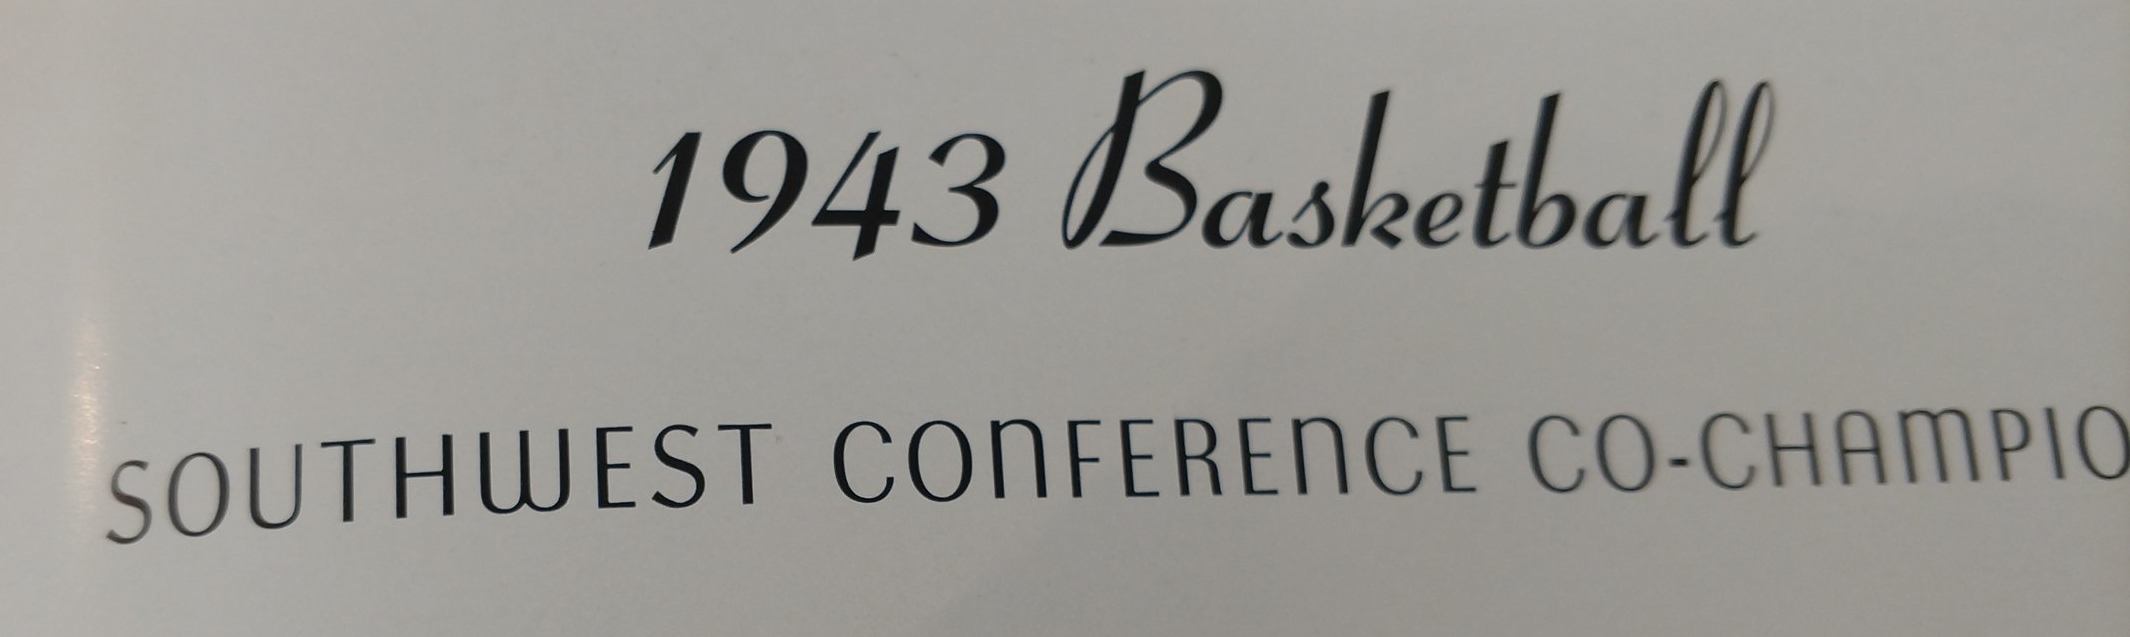 Basketball 1942-1943 (6).jpg